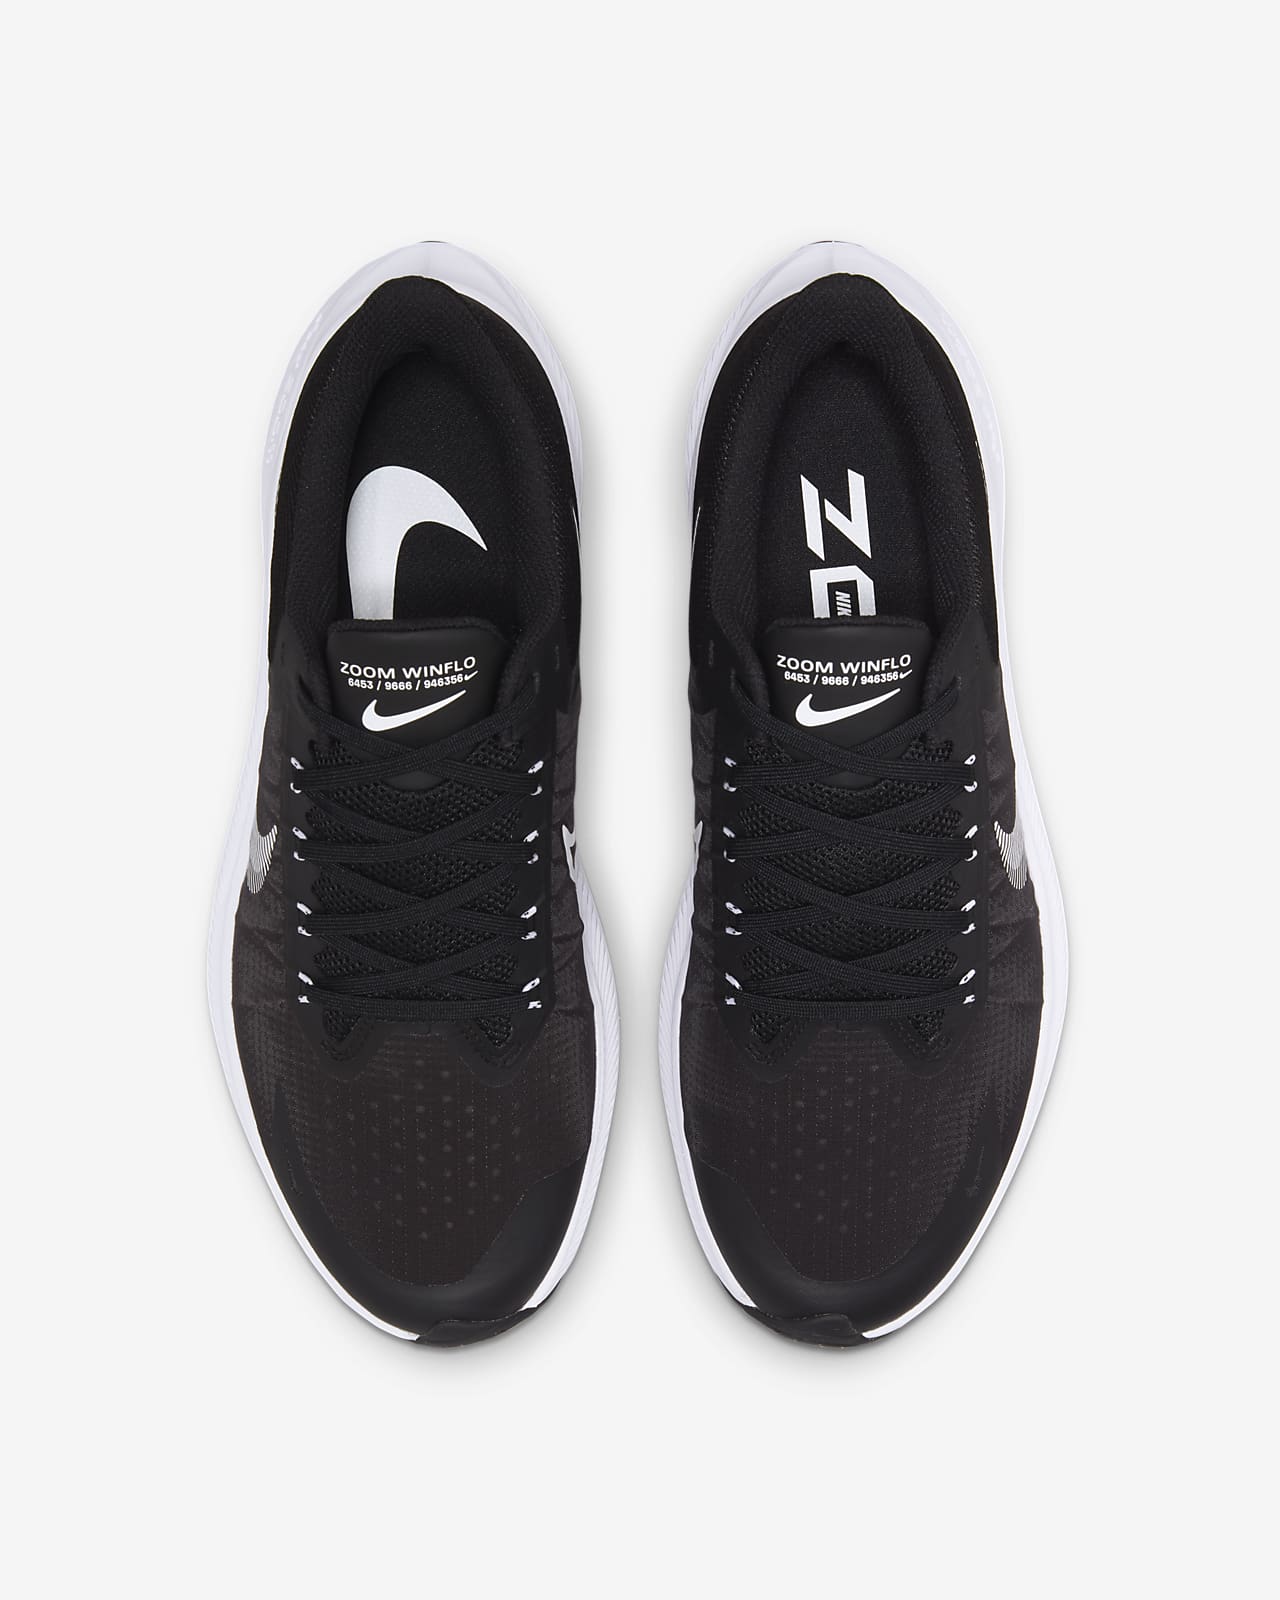 Nike Winflo 8 Men's Road Running Shoes